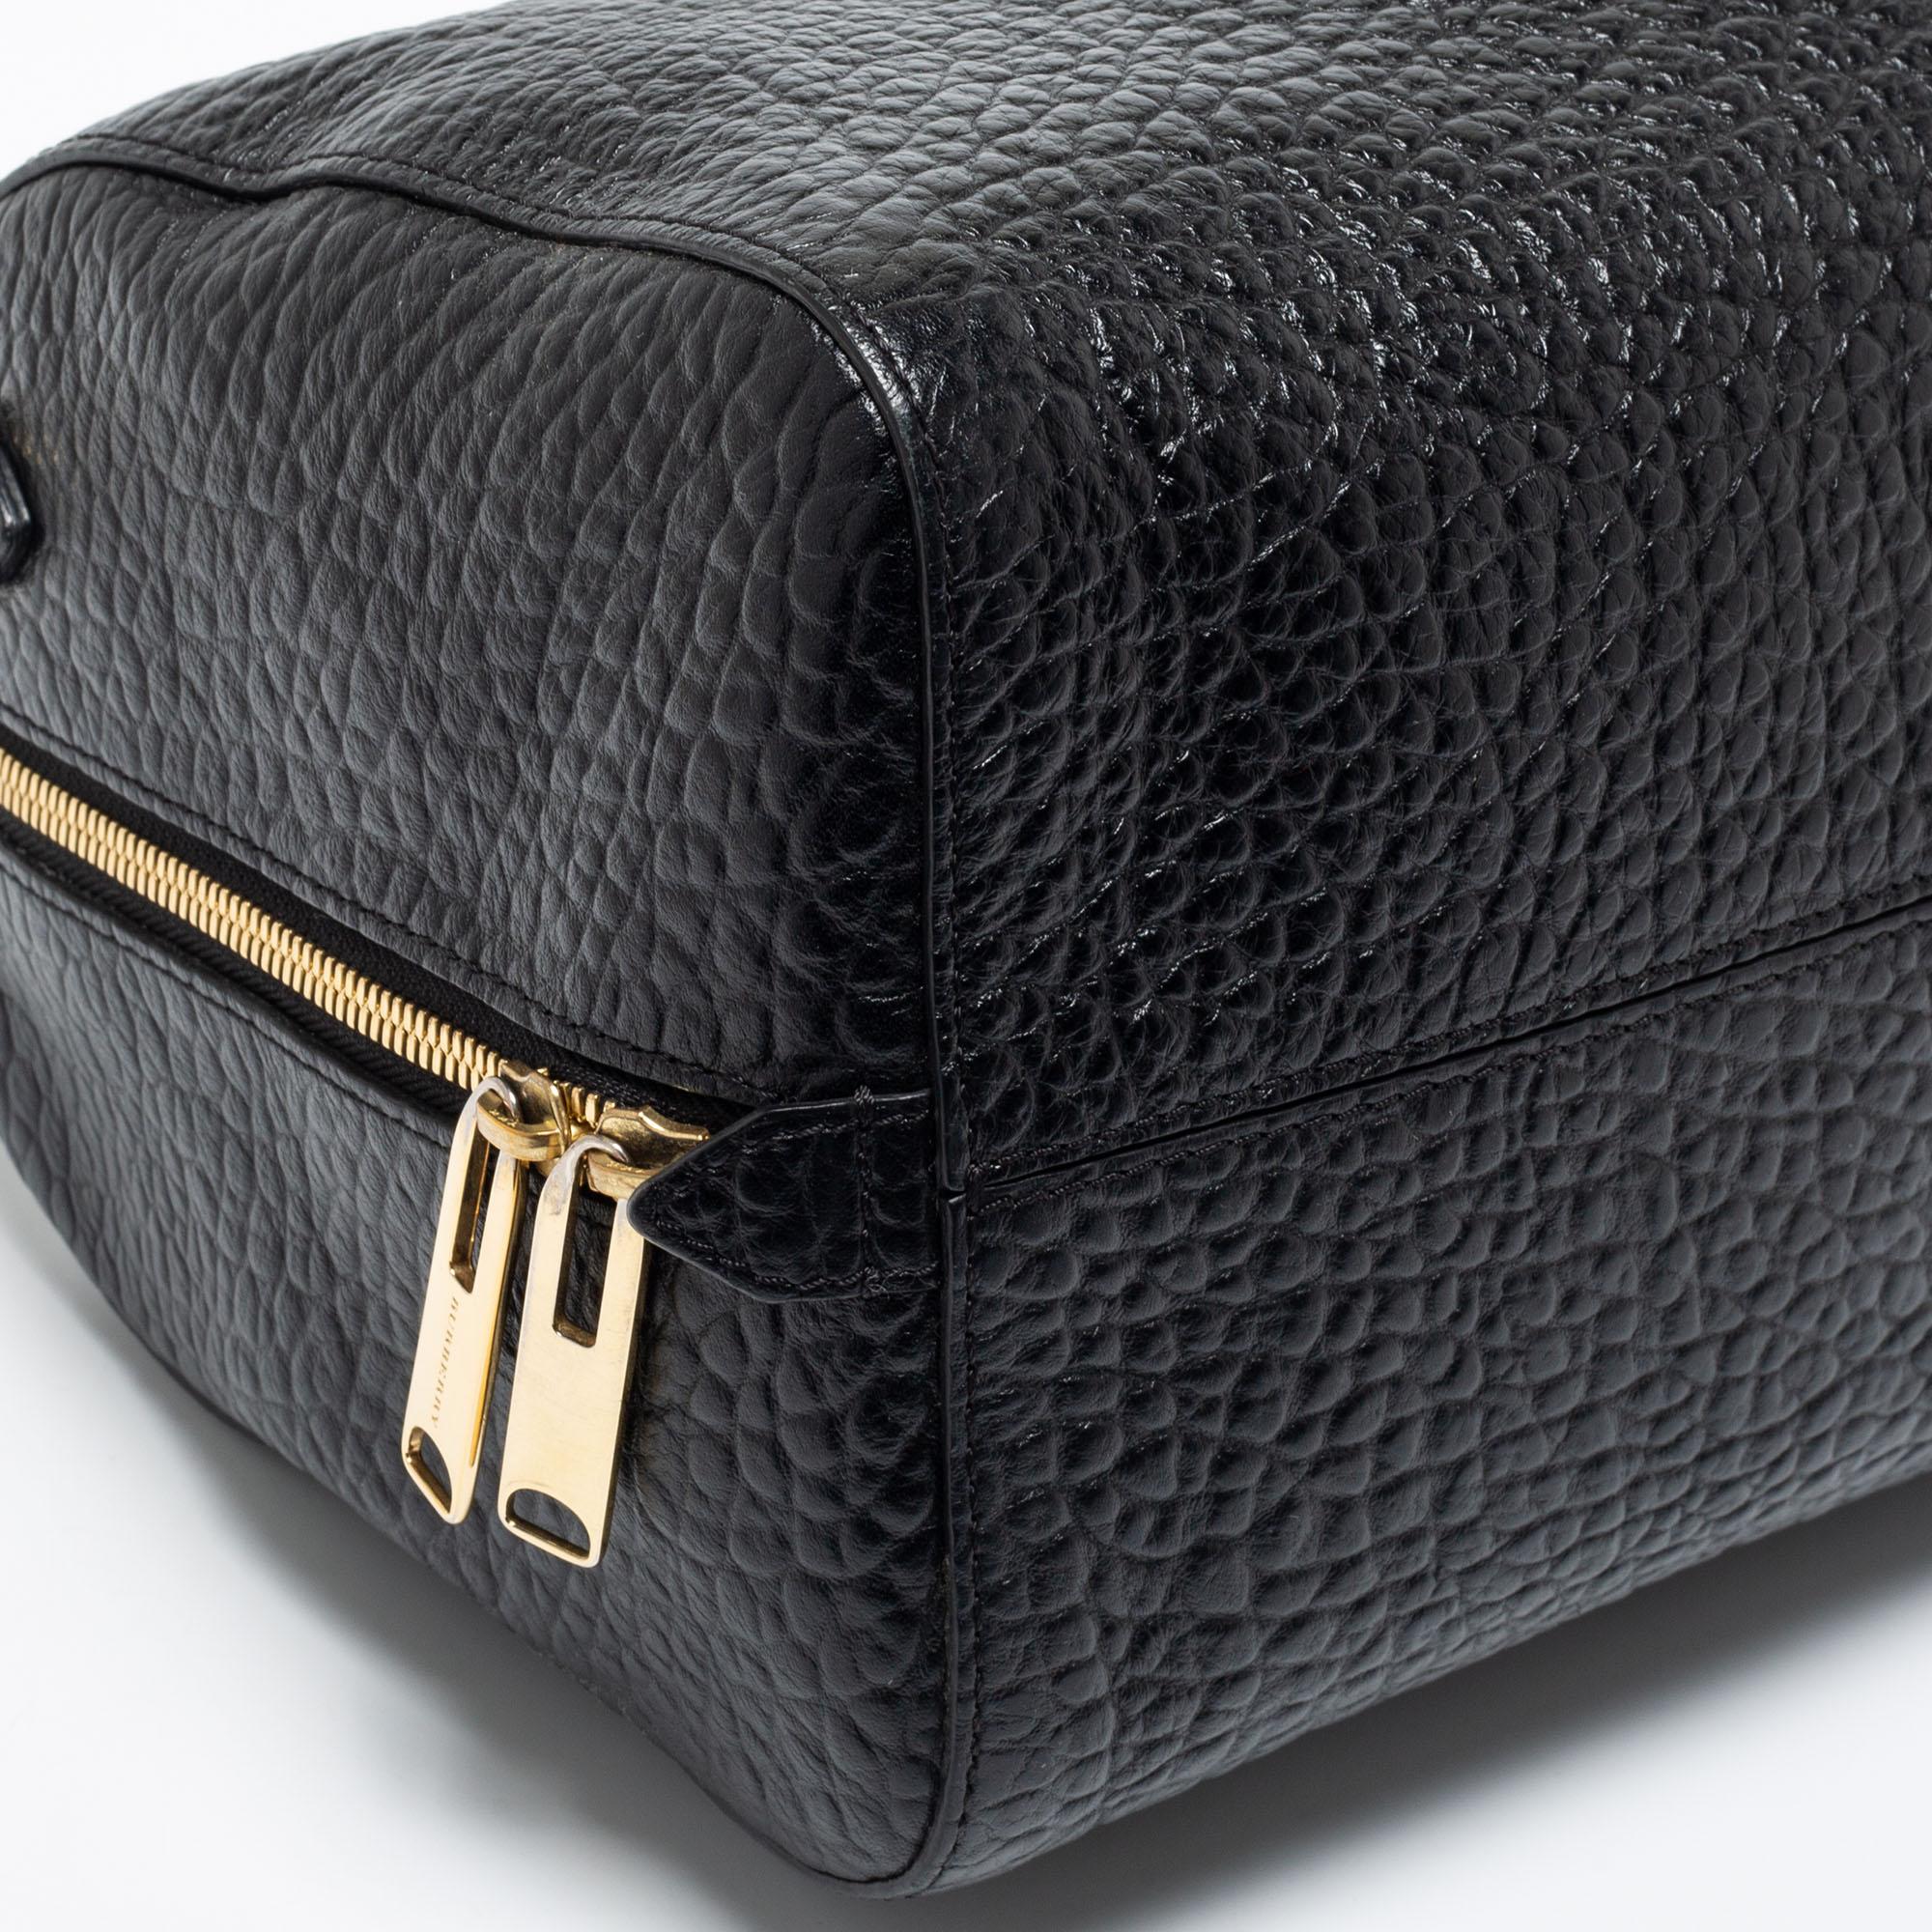 Burberry Black Pebbled Leather Zip Boston Bag 4